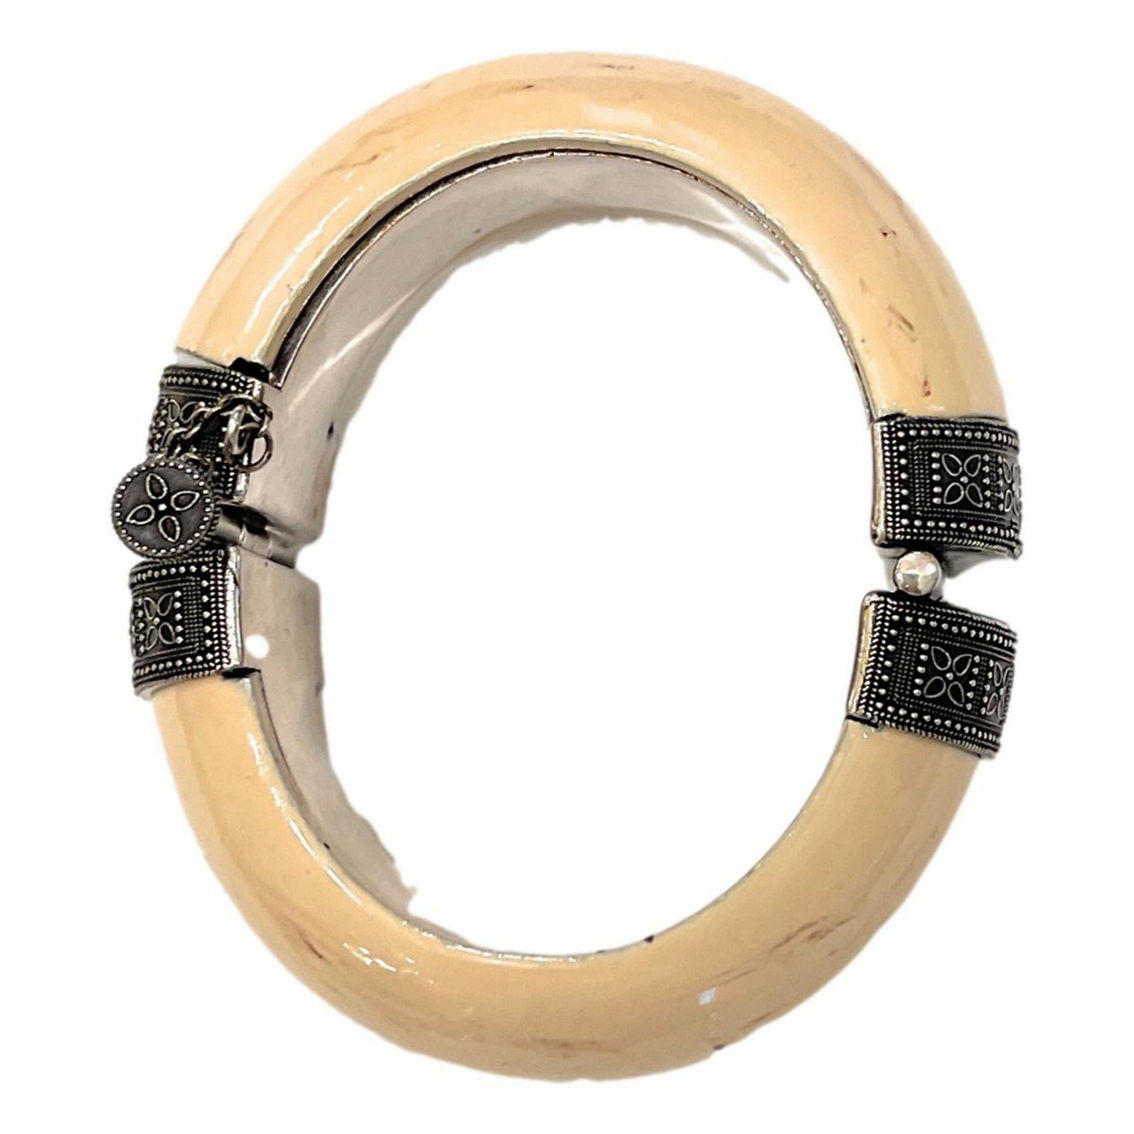 Saint Laurent Ivory Silver Bangle Bracelet (New) - Image 4 of 4